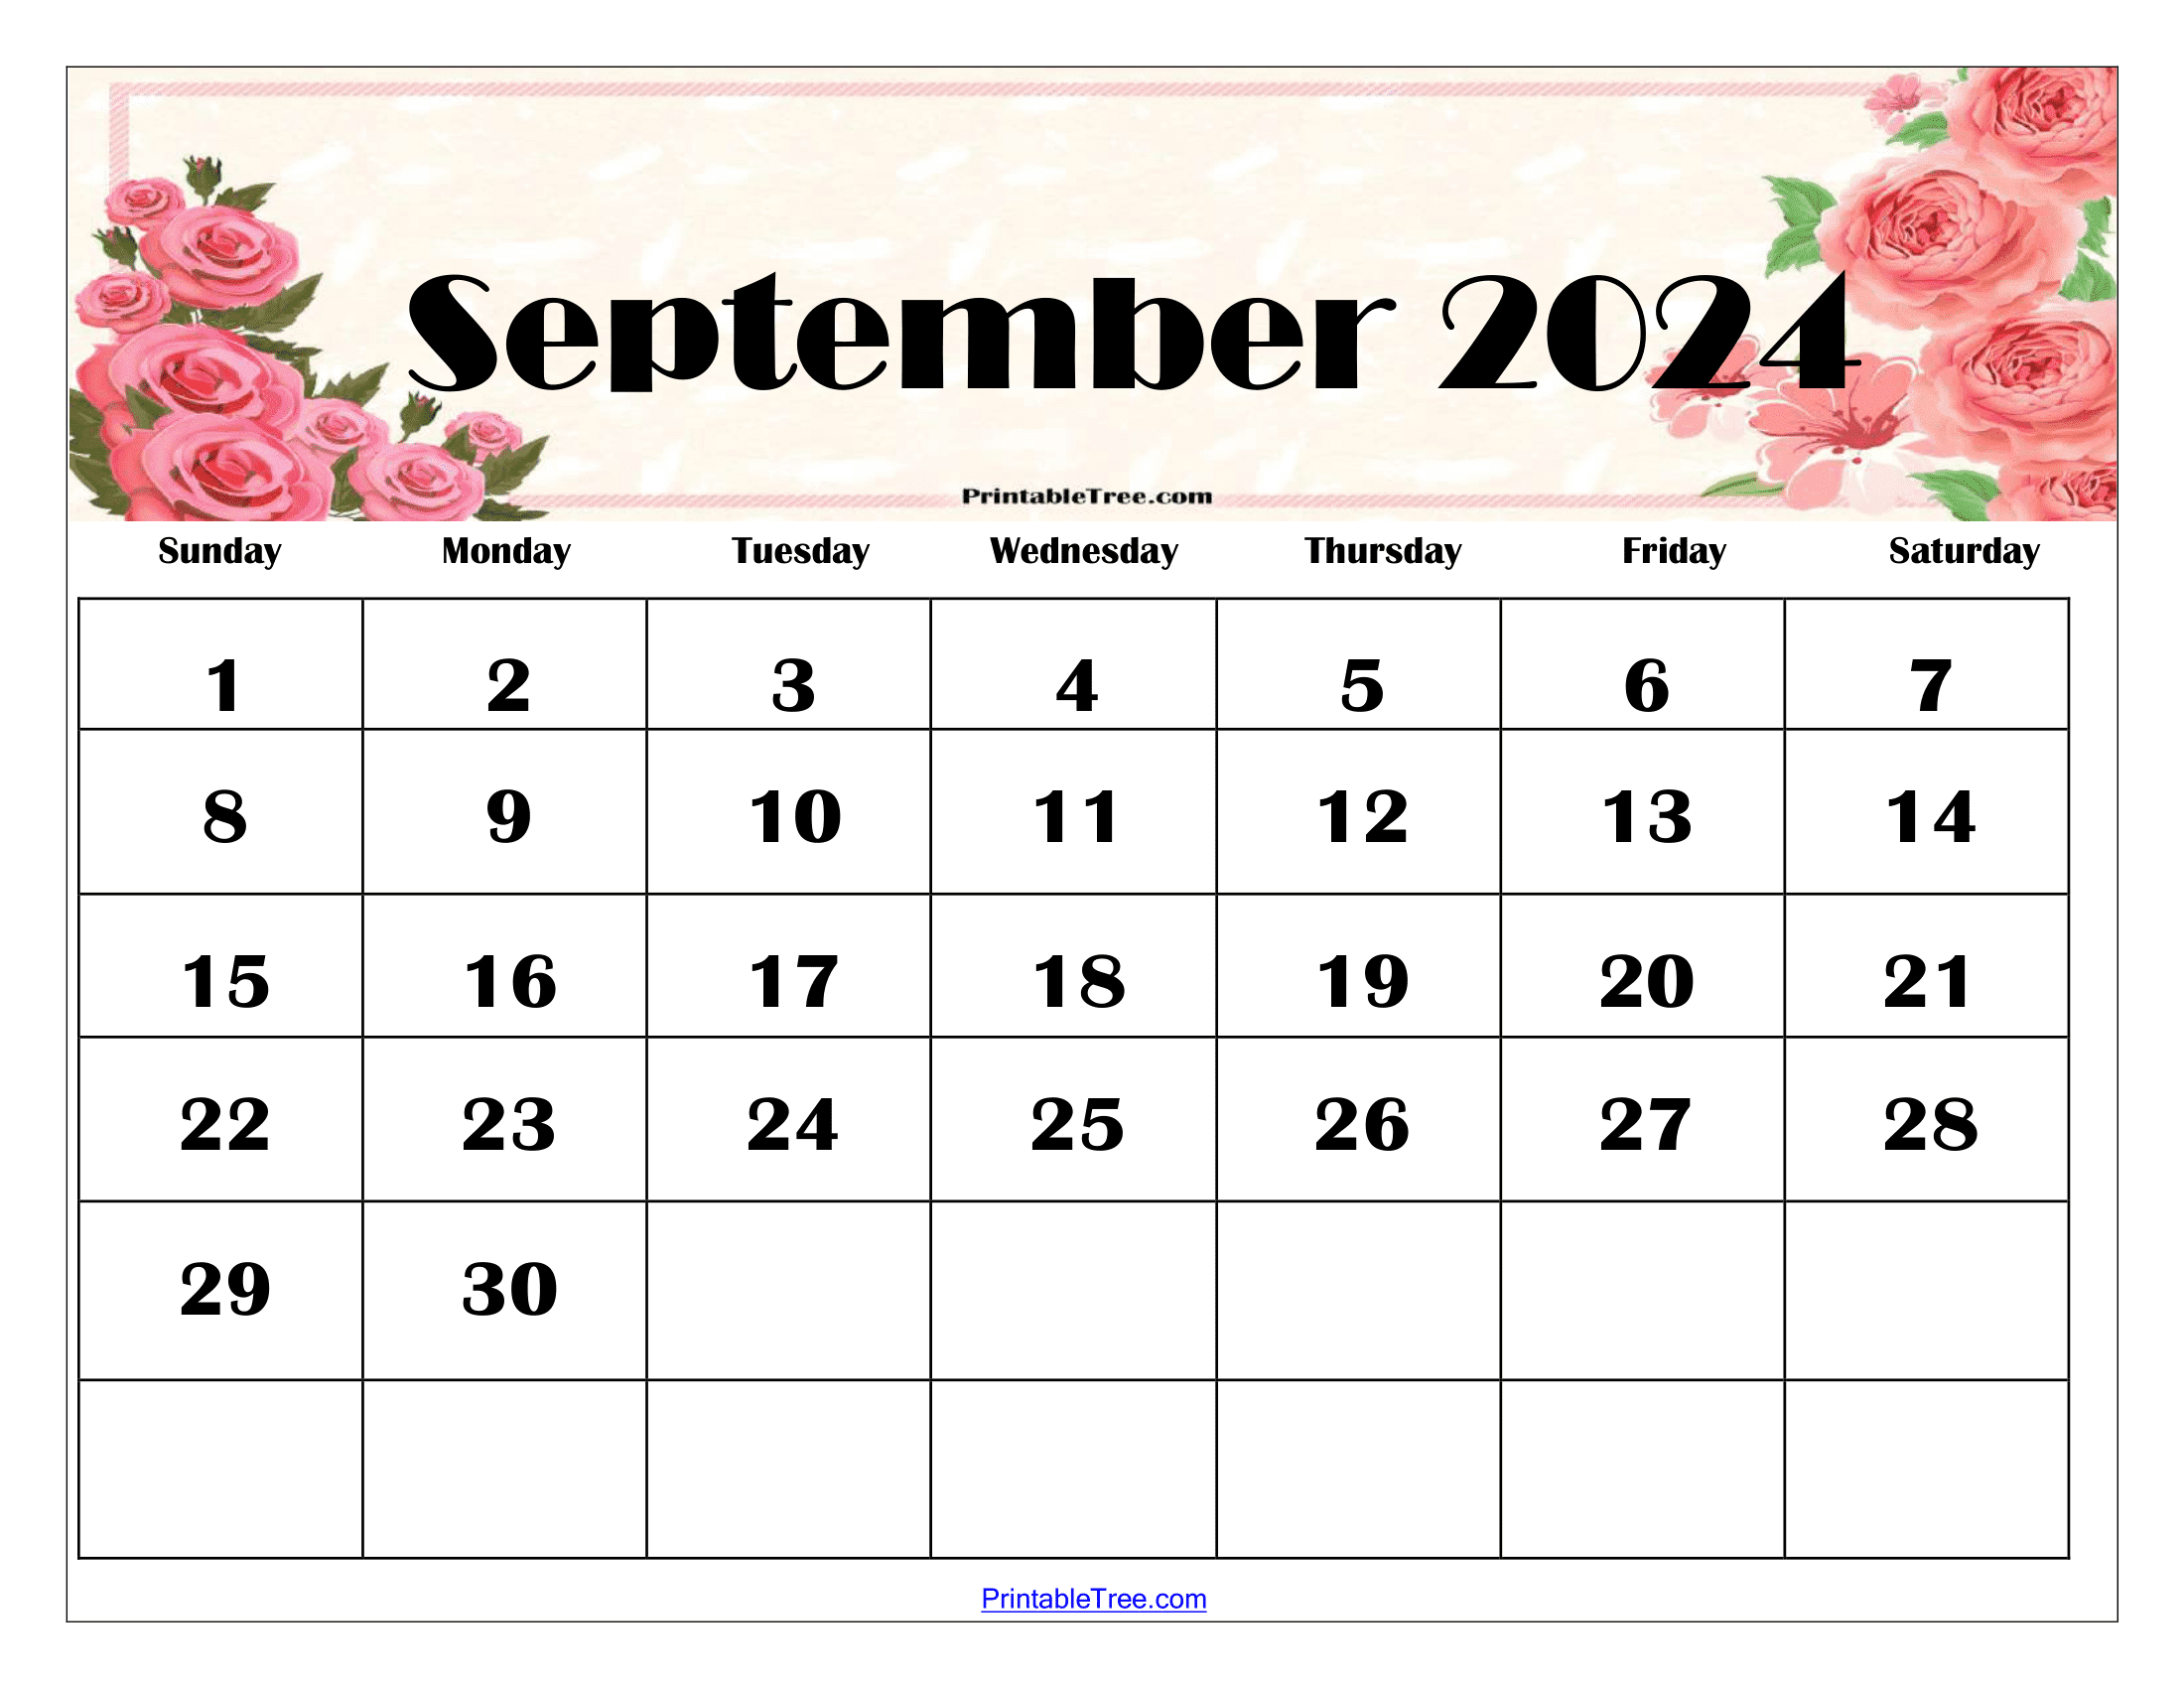 September 2024 Calendar Printable Pdf With Holidays pertaining to Free Printable Appointment Calendar September 2024